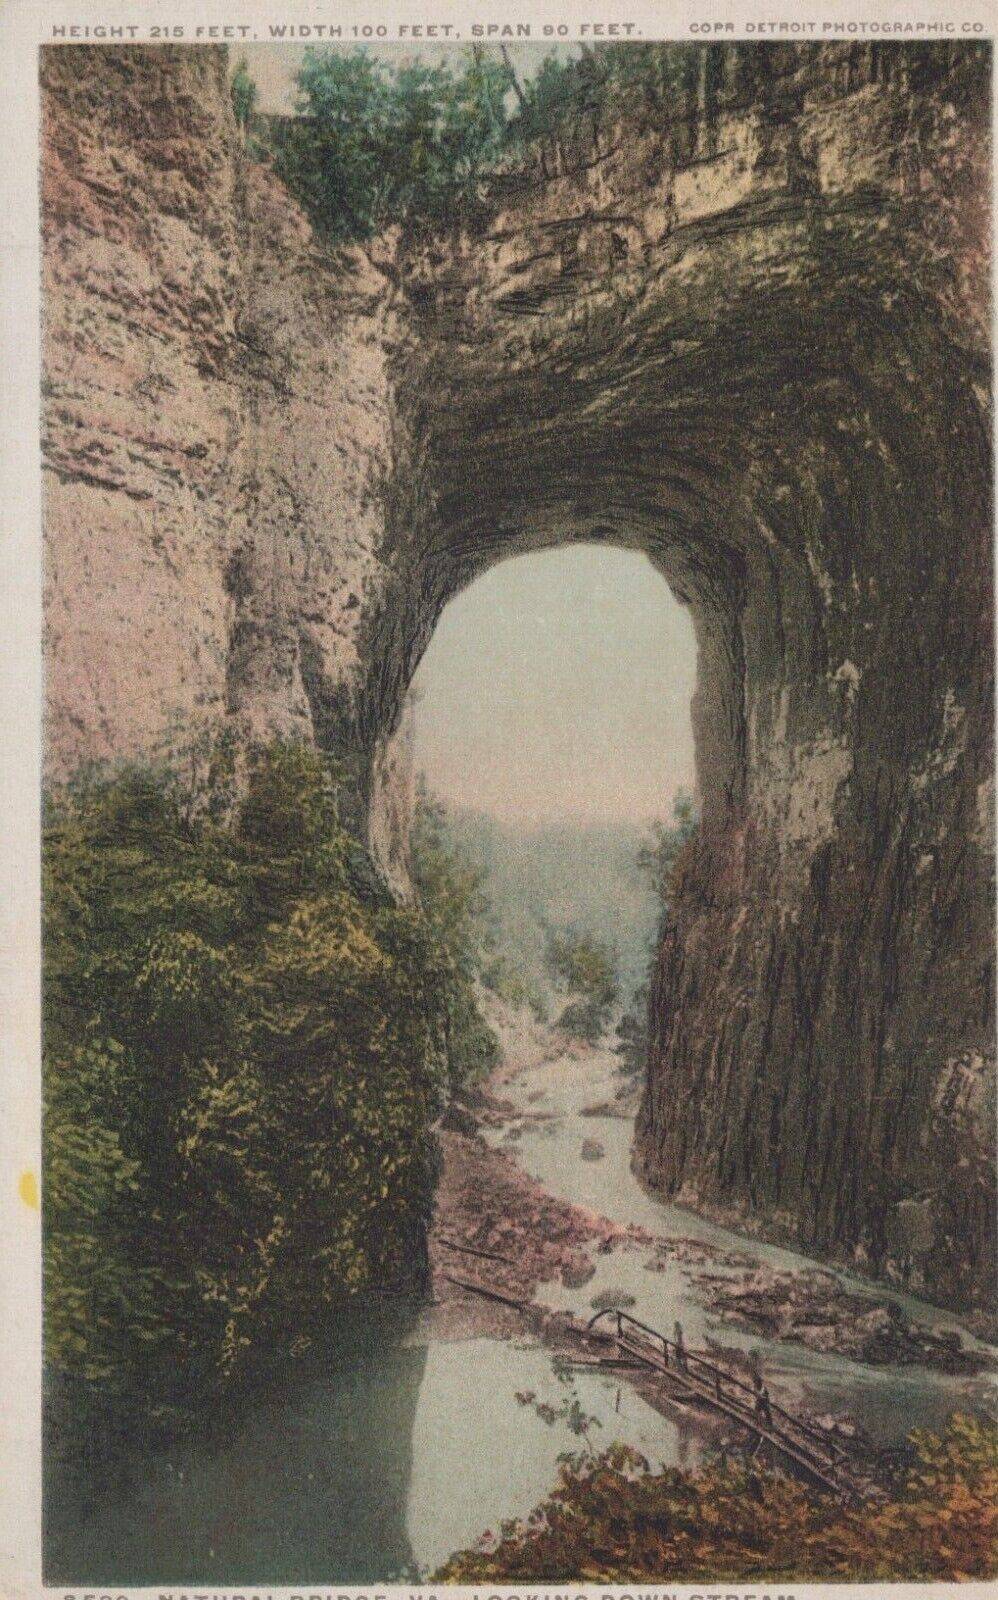 The Natural Bridge Of Virginia Rockbridge County White Border Vintage Post Card